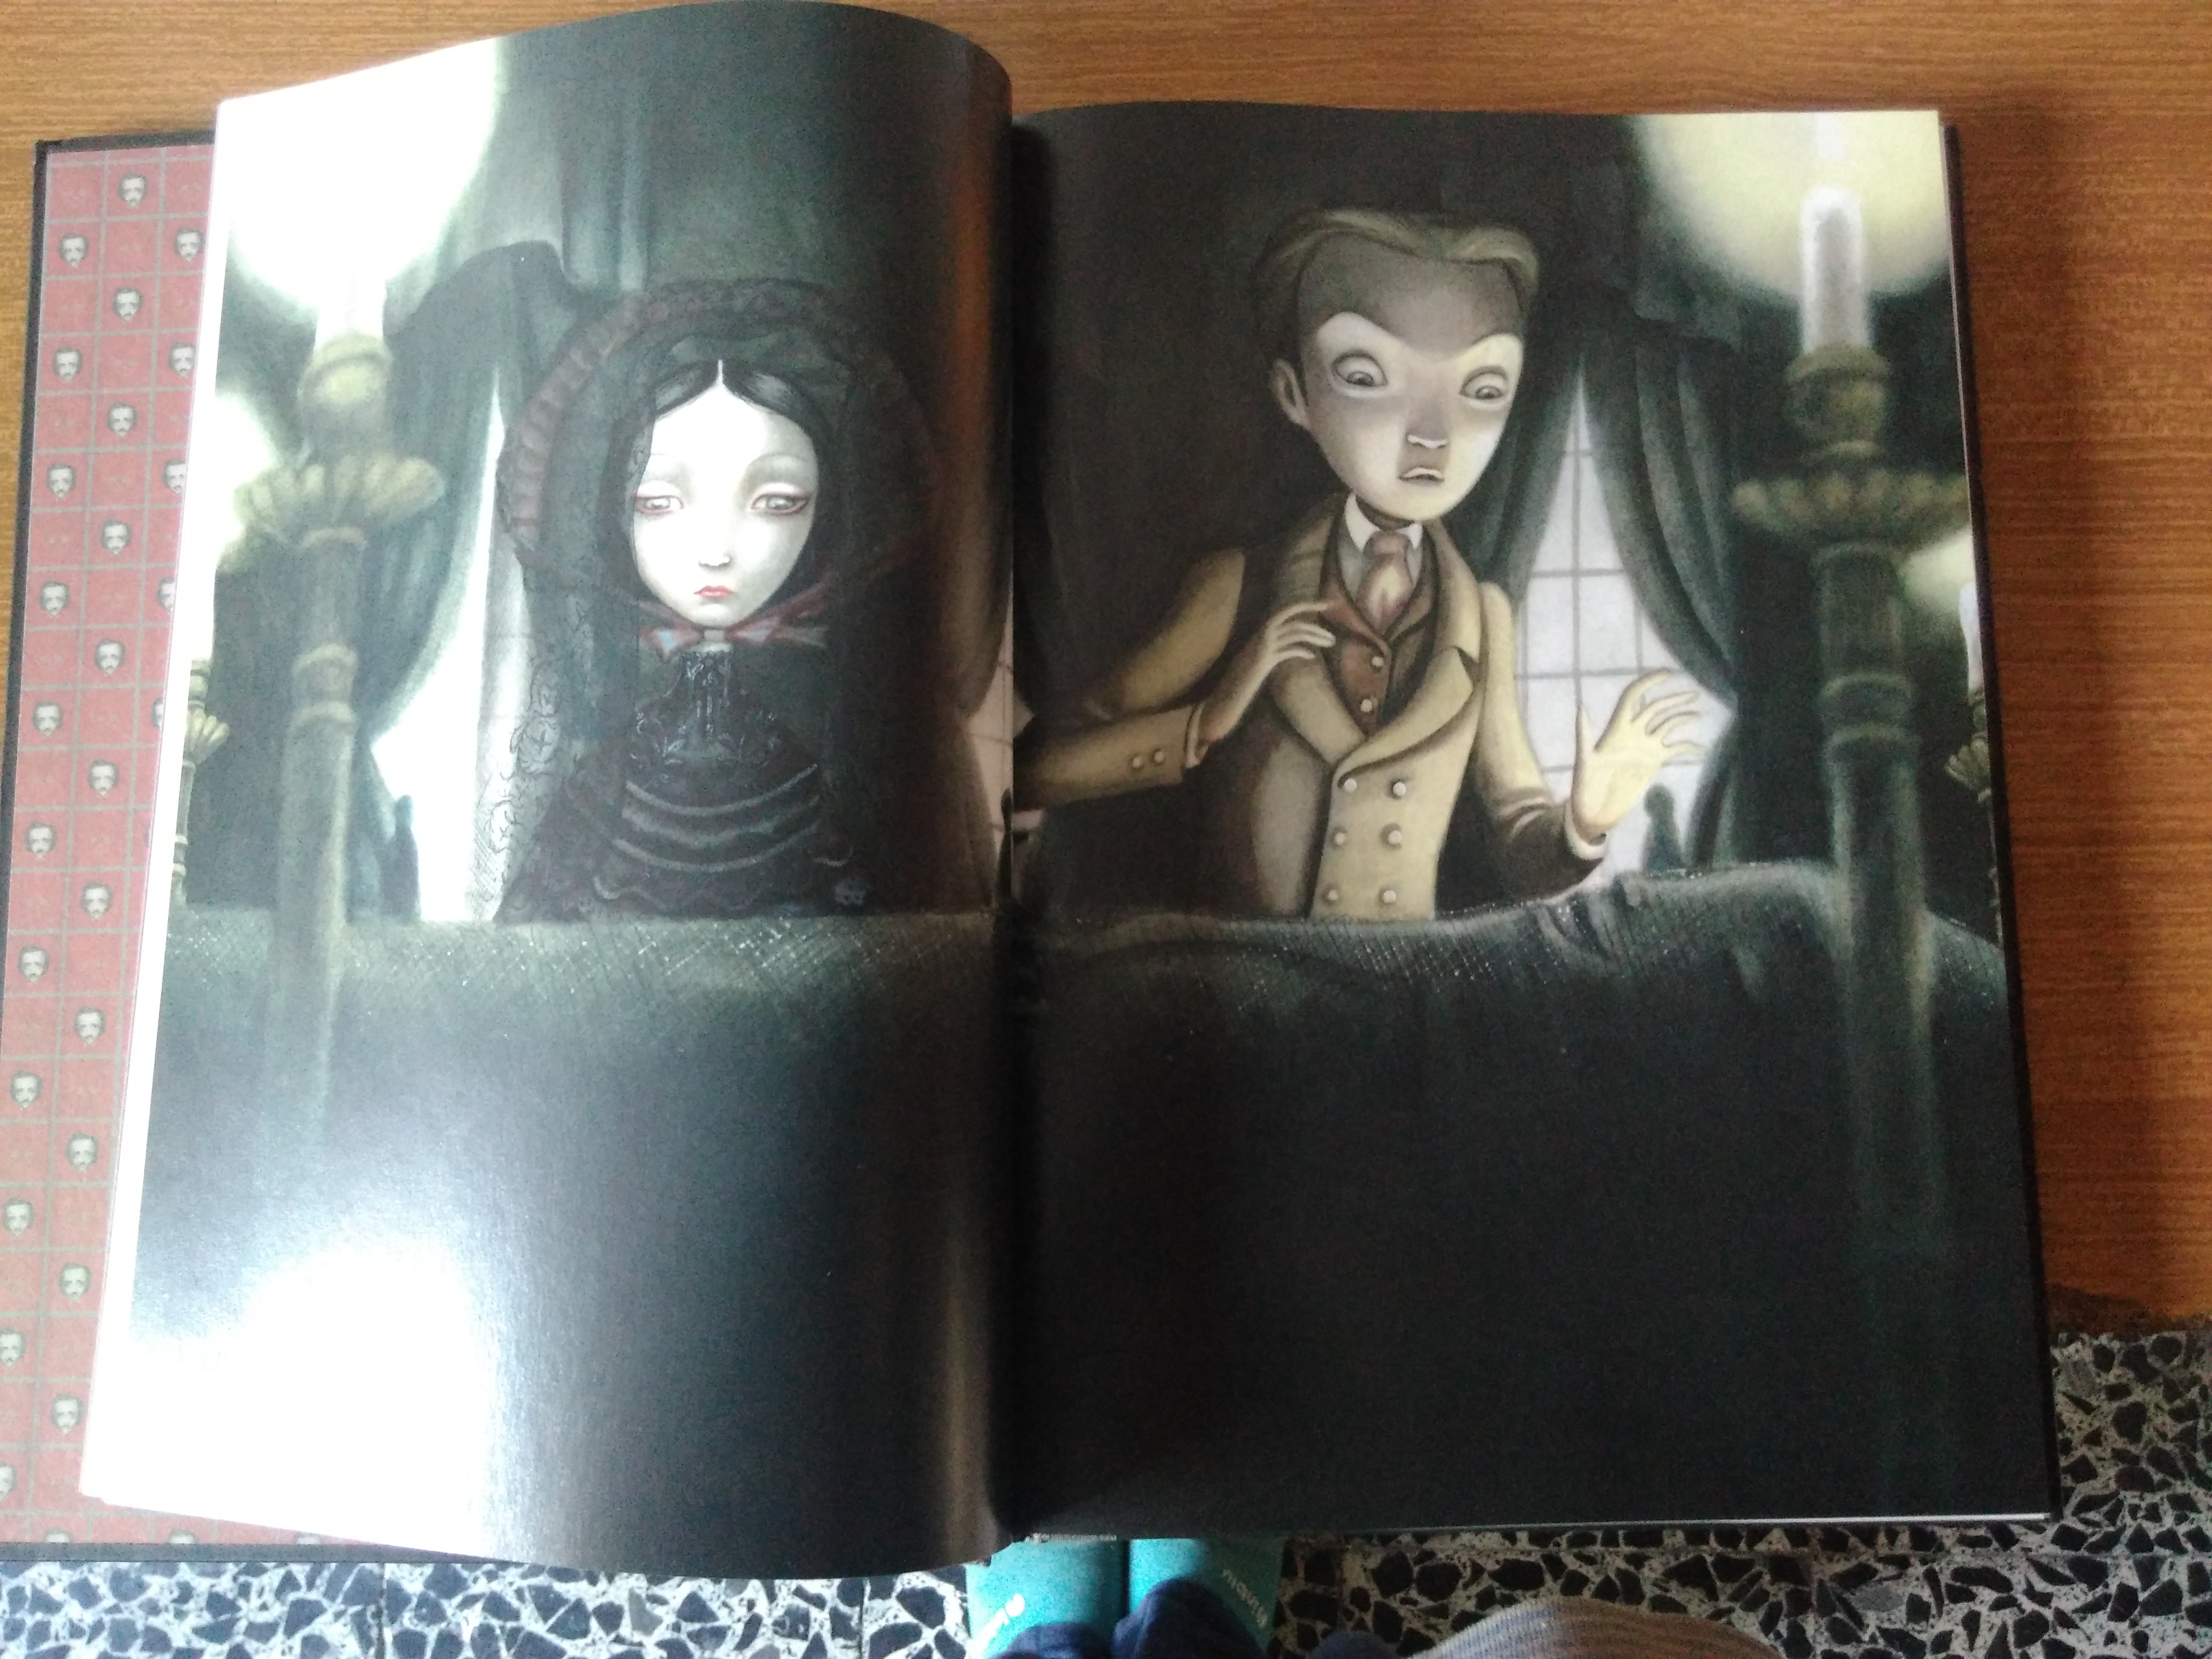 Tales of the macabre by Edgar Allan Poe & Benjamin Lacombe